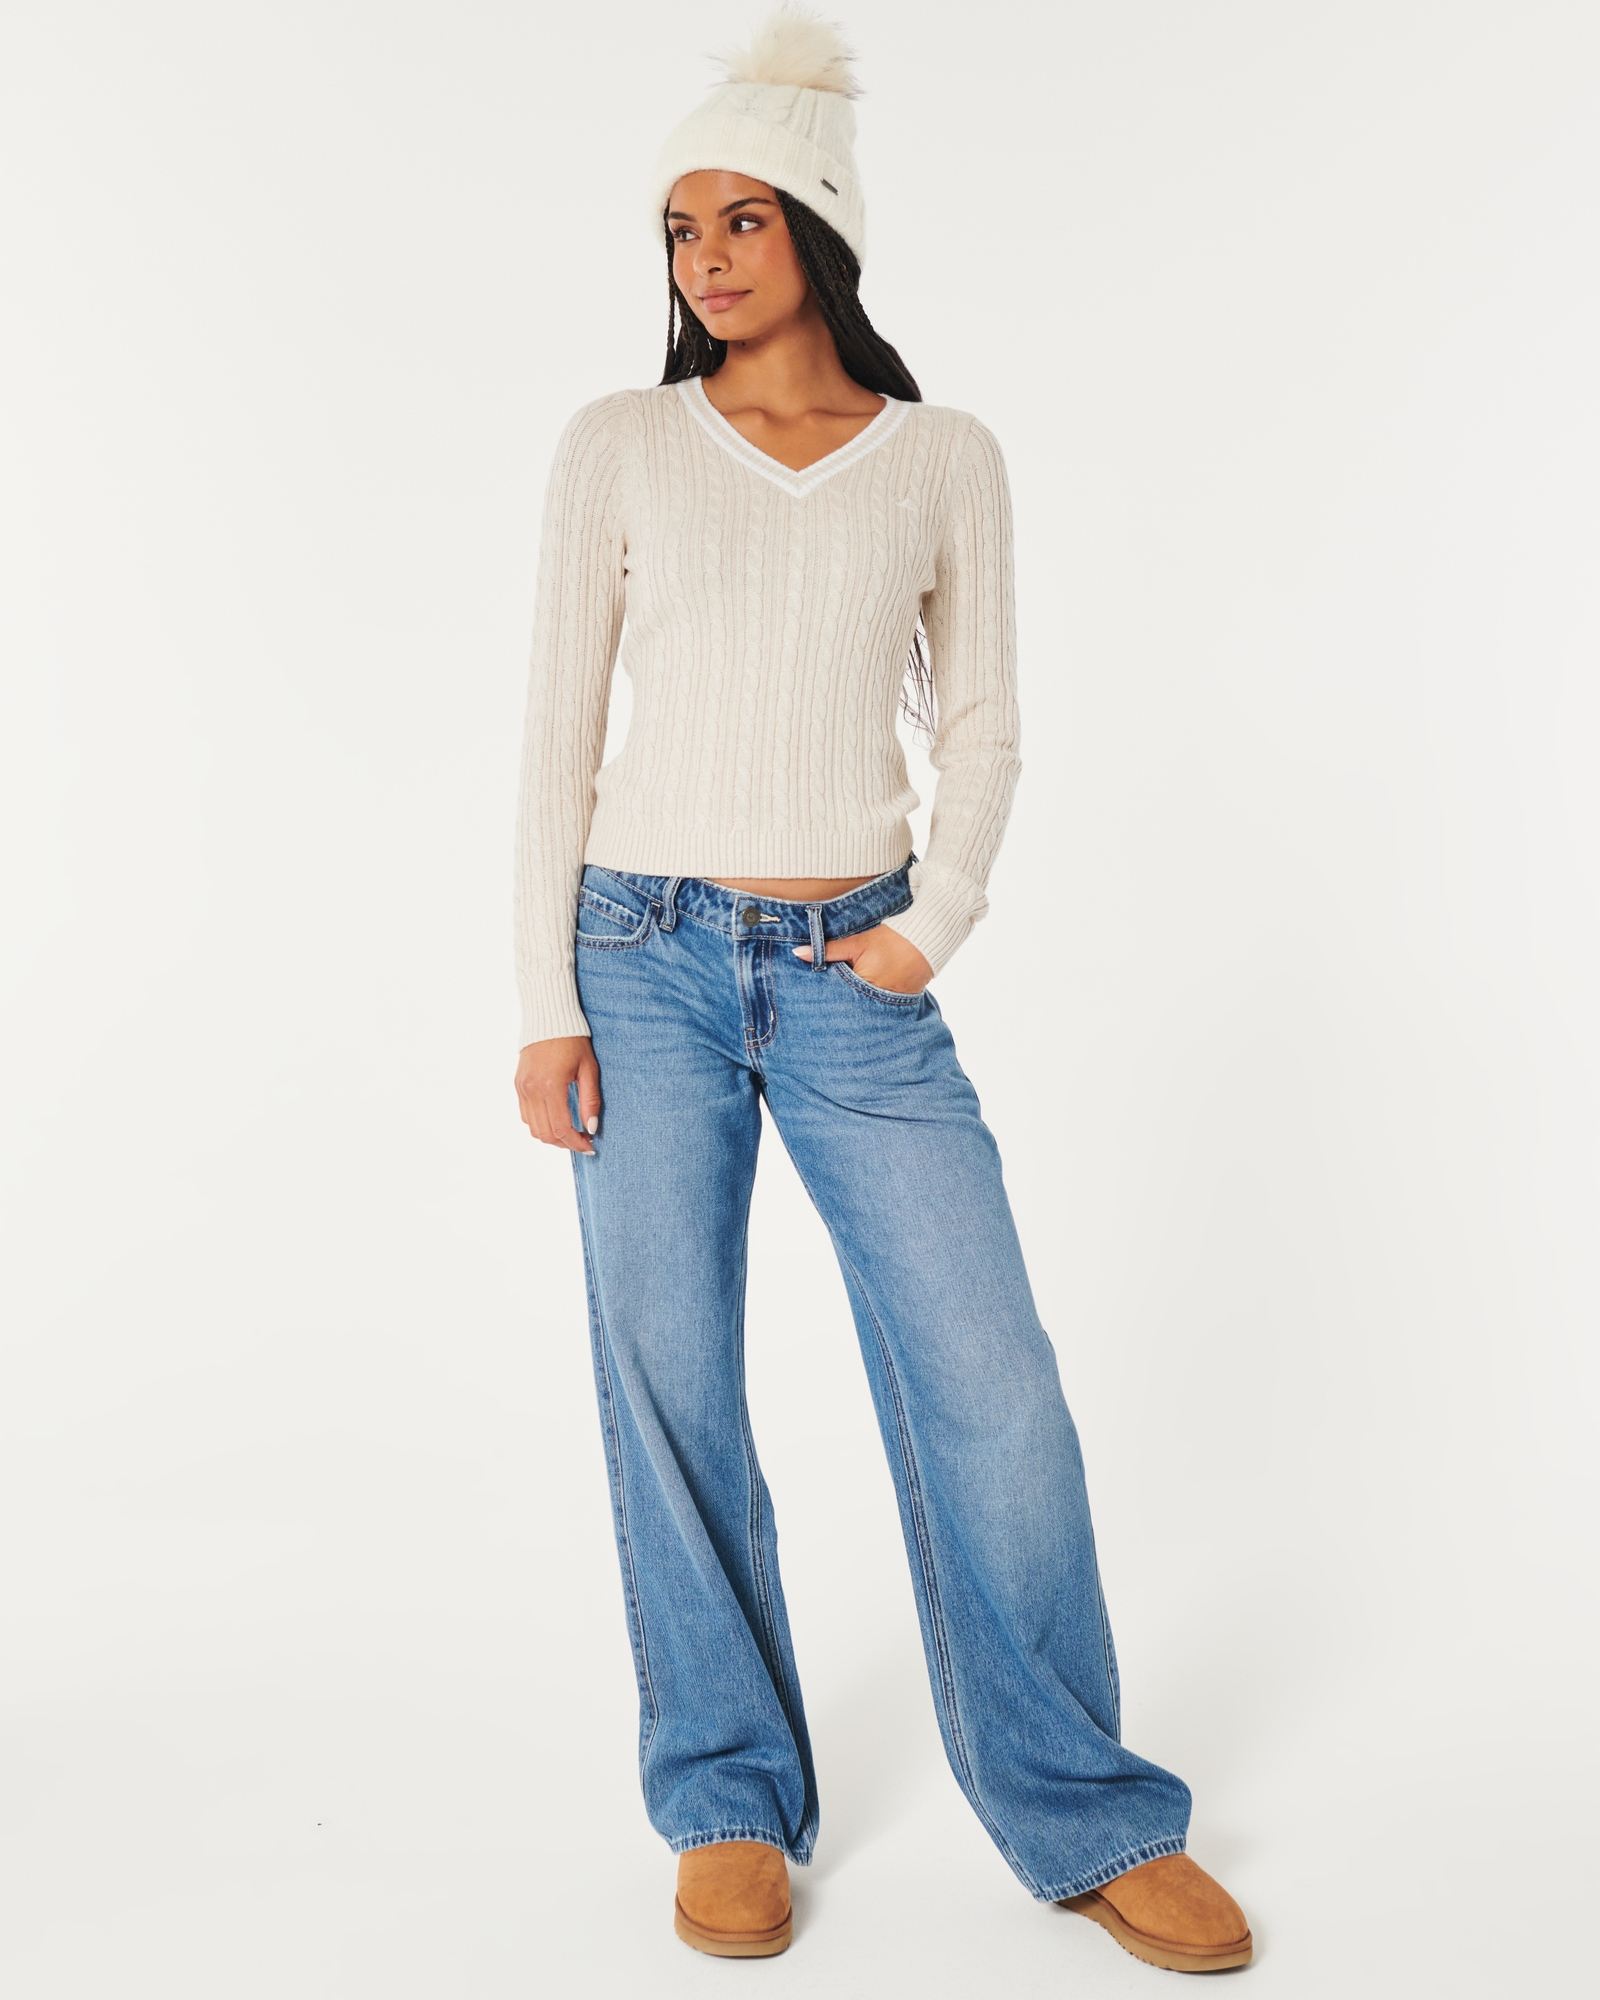 Hollister Blue & Turquoise Variegated V-Neck Sweater Size Jrs S 5